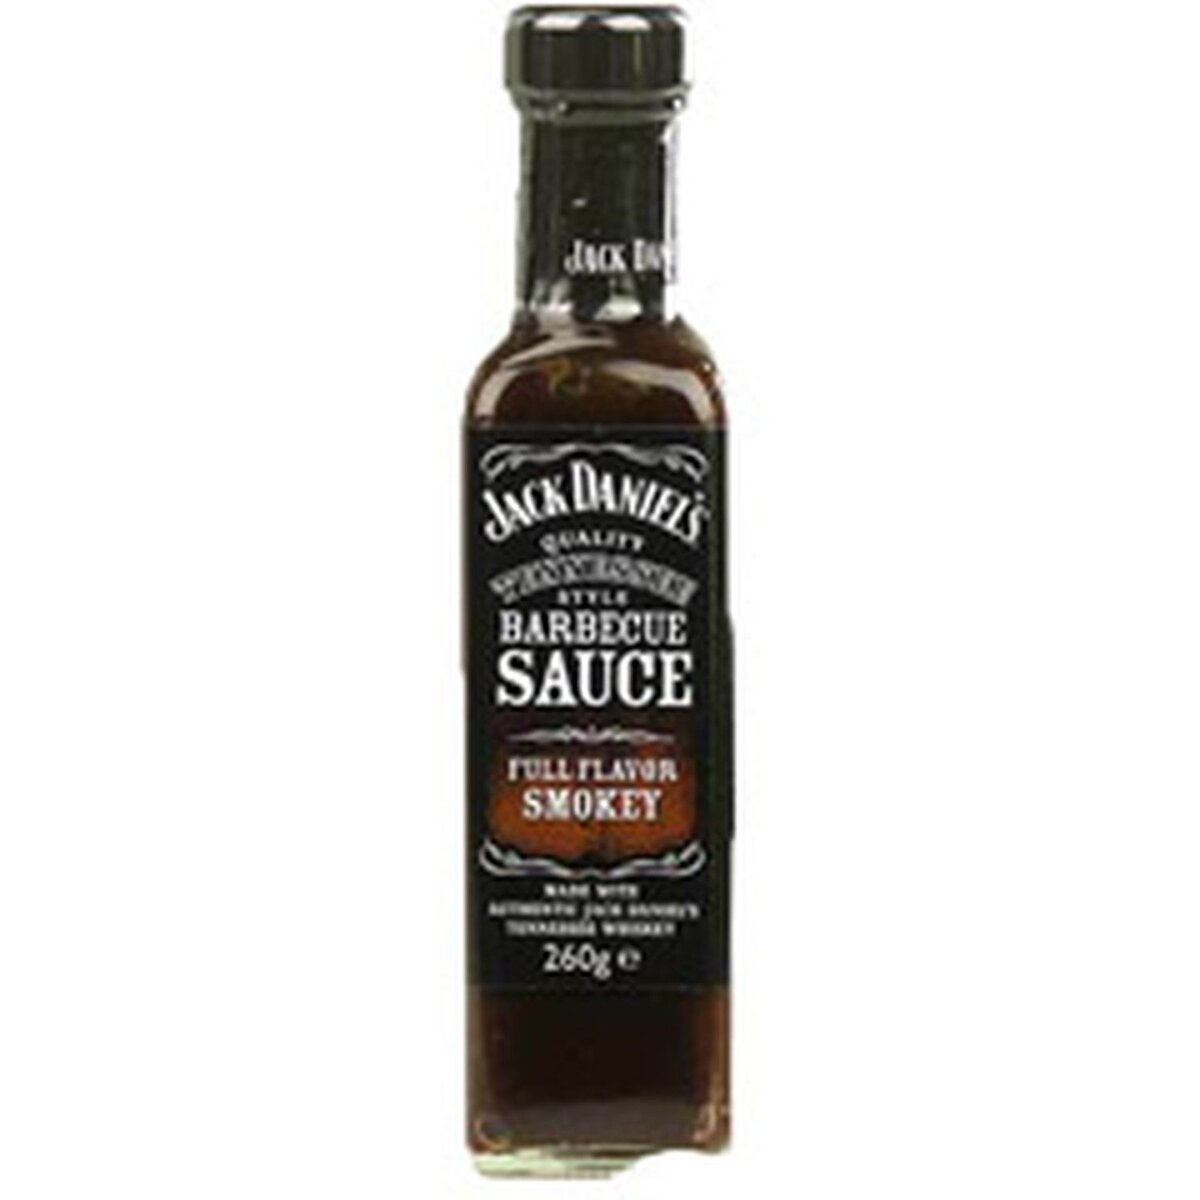 JACK DANIEL'S Jack Daniel's sauce smokey barbecue 260g